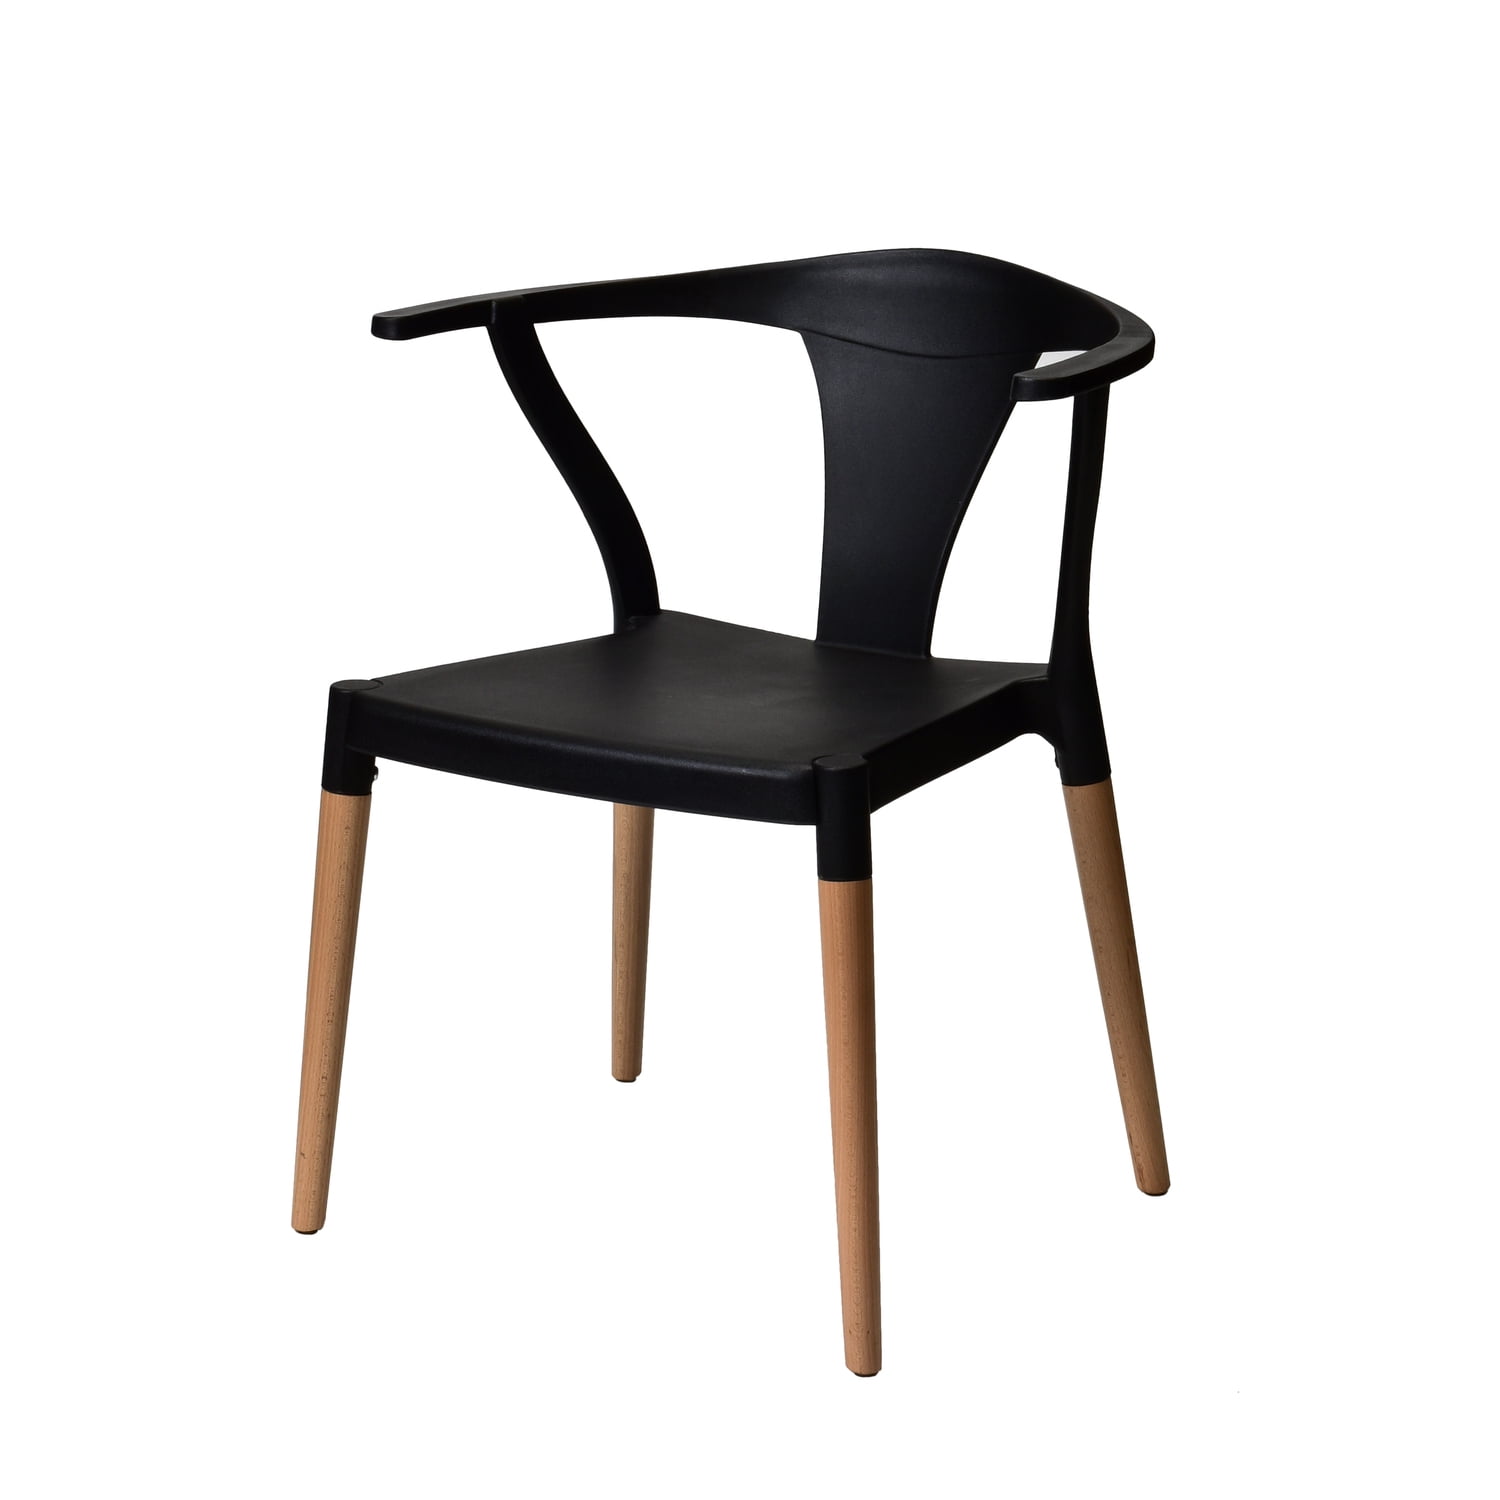 Cdpw1001-zsfp-bk Mid Century Modern Arm Chair - Black - 29.5 In.